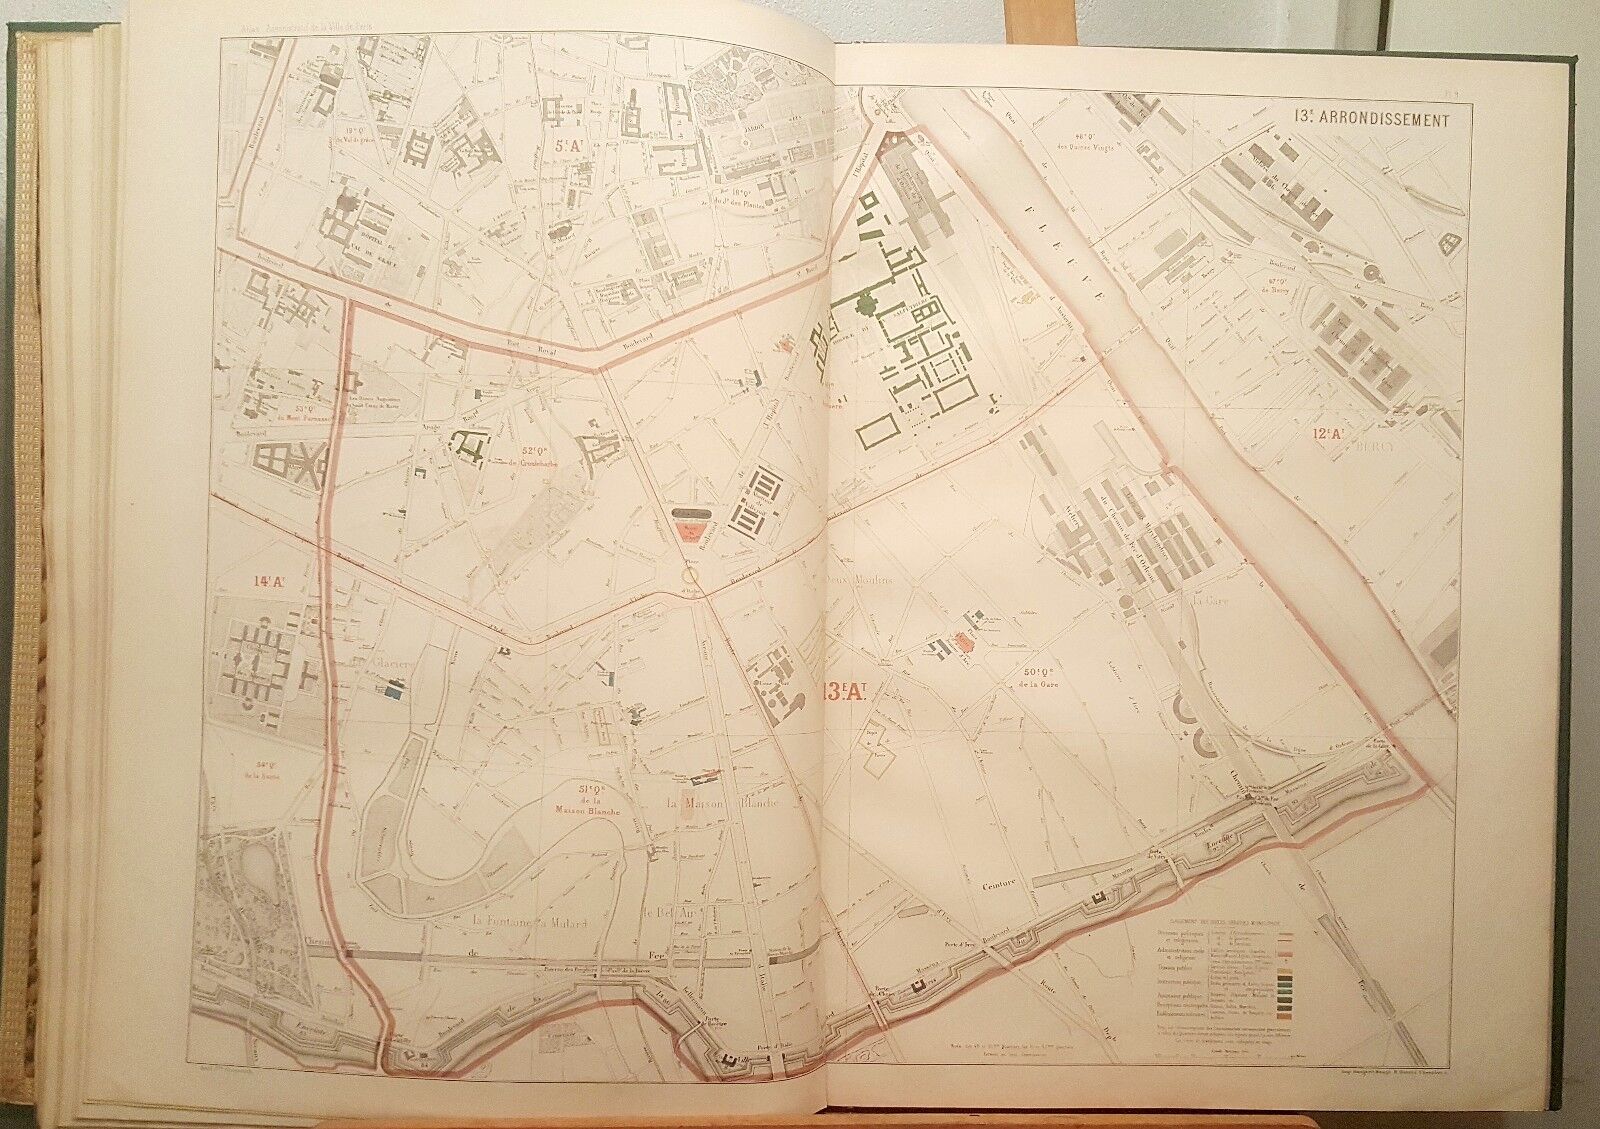 Paris XIIIth - Baron Haussmann Very Rare Plan from 1868 to 1/5000 (63x89 cms)